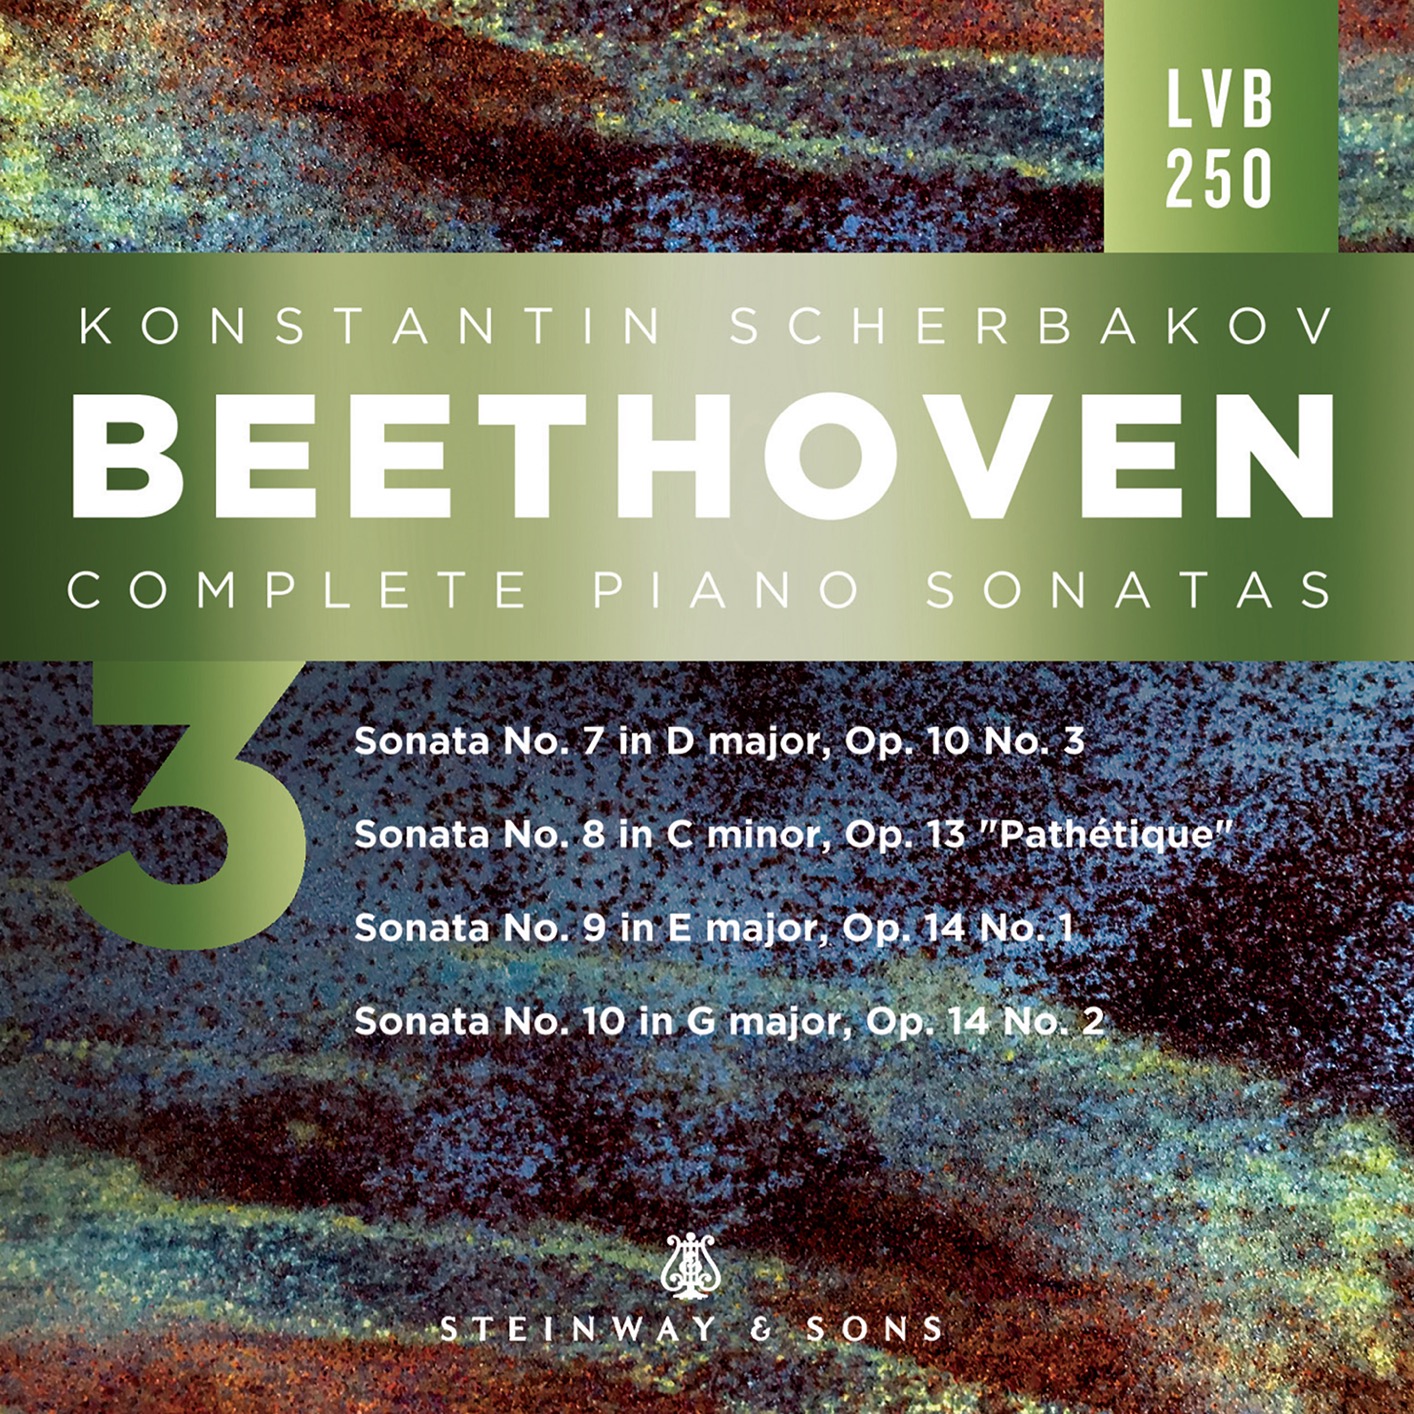 Konstantin Scherbakov - Beethoven: Complete Piano Sonatas, Vol. 3 (2020) [FLAC 24bit/96kHz]